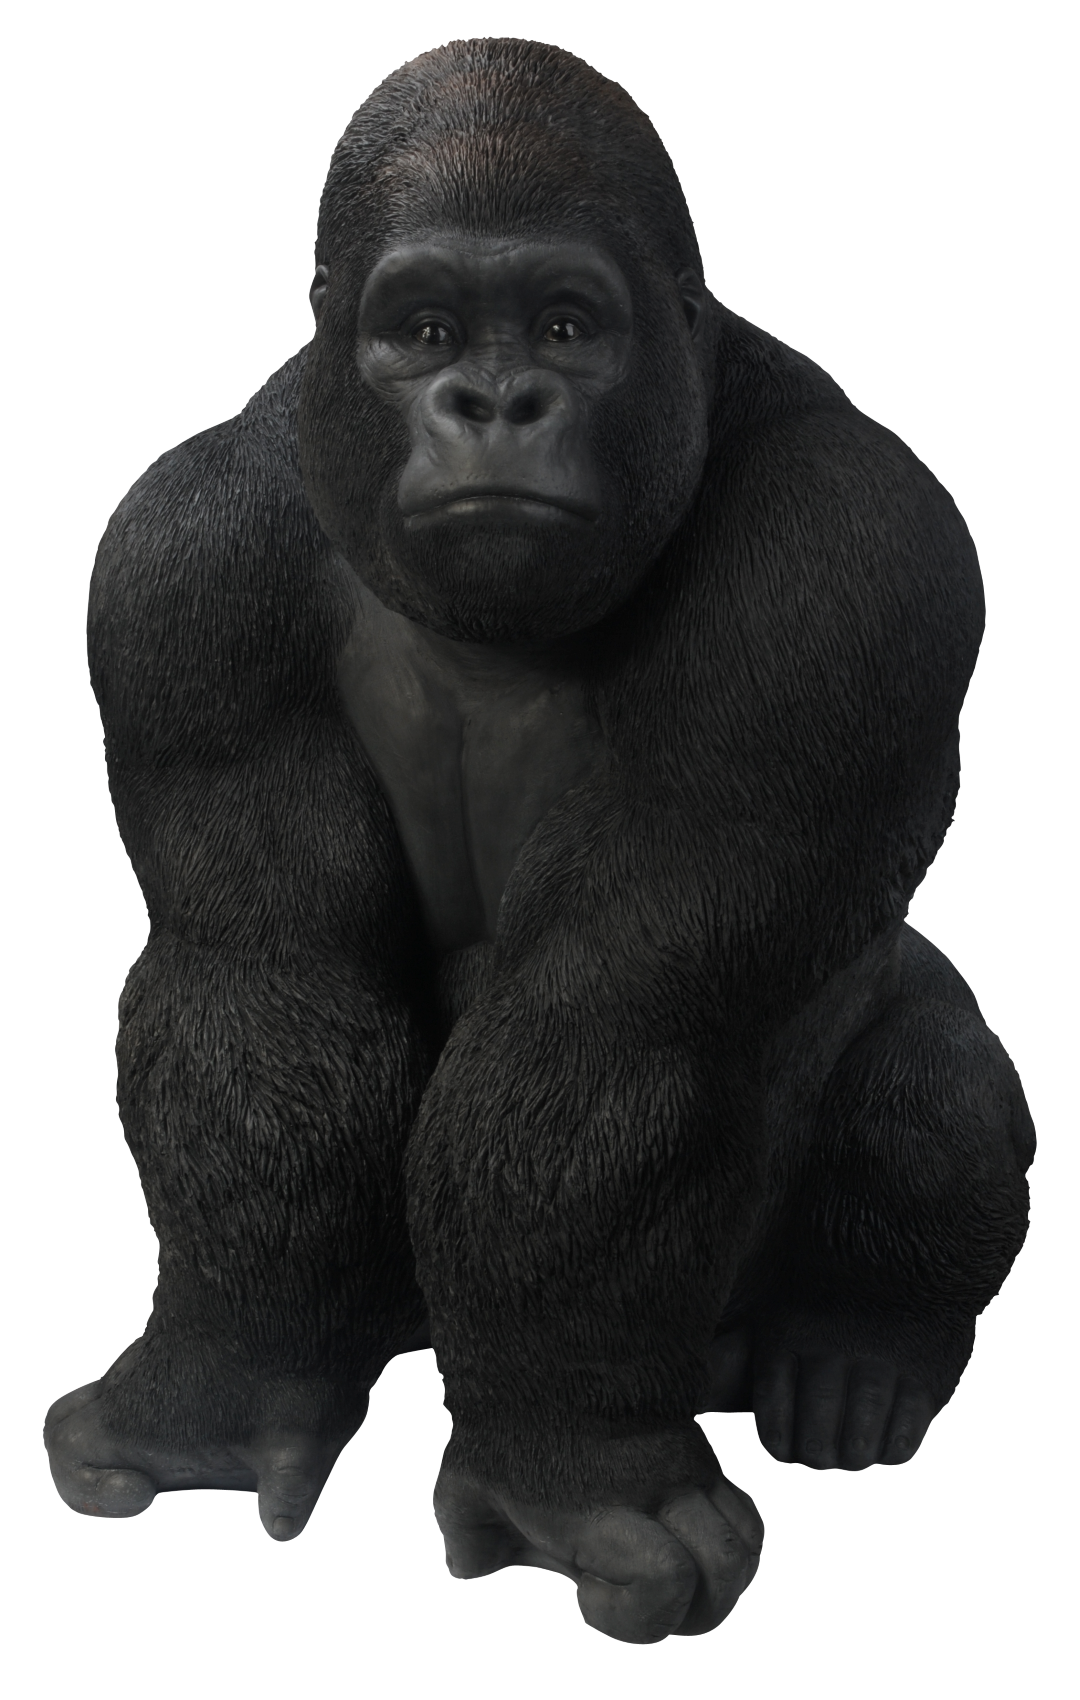 PNG File Name: Gorilla PlusPn